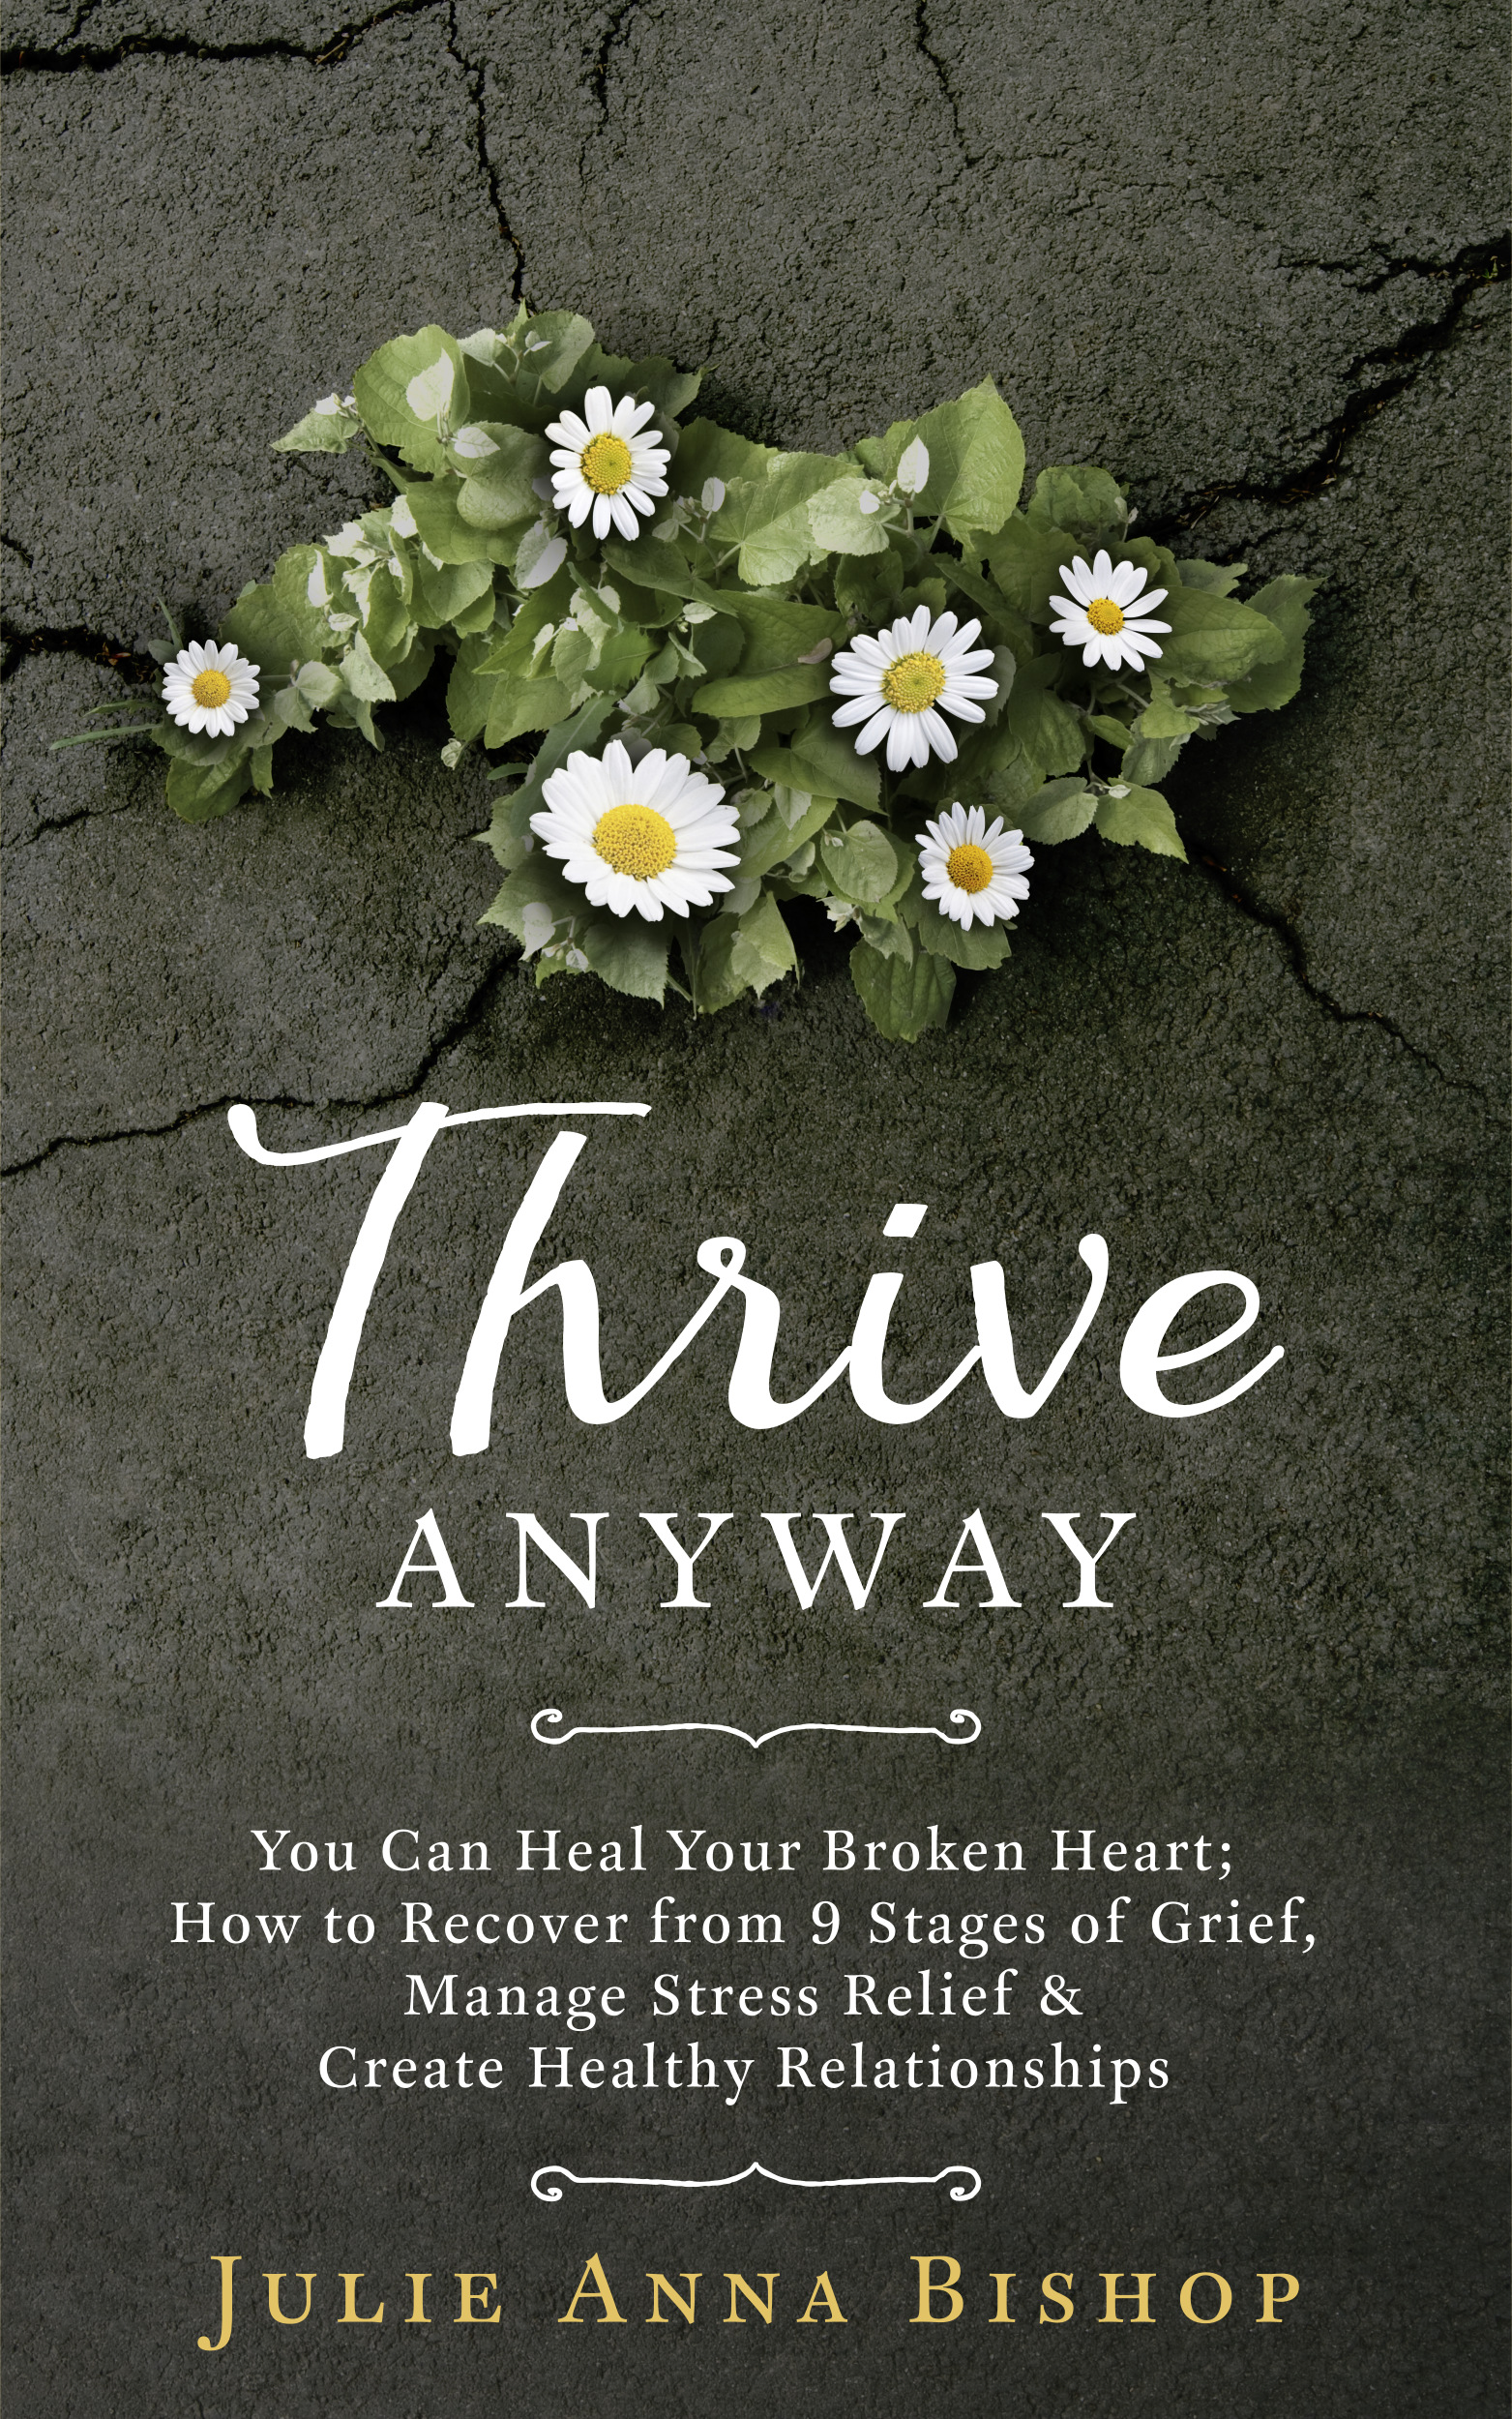 Thrive Anyway by Julie Anna Bishop'